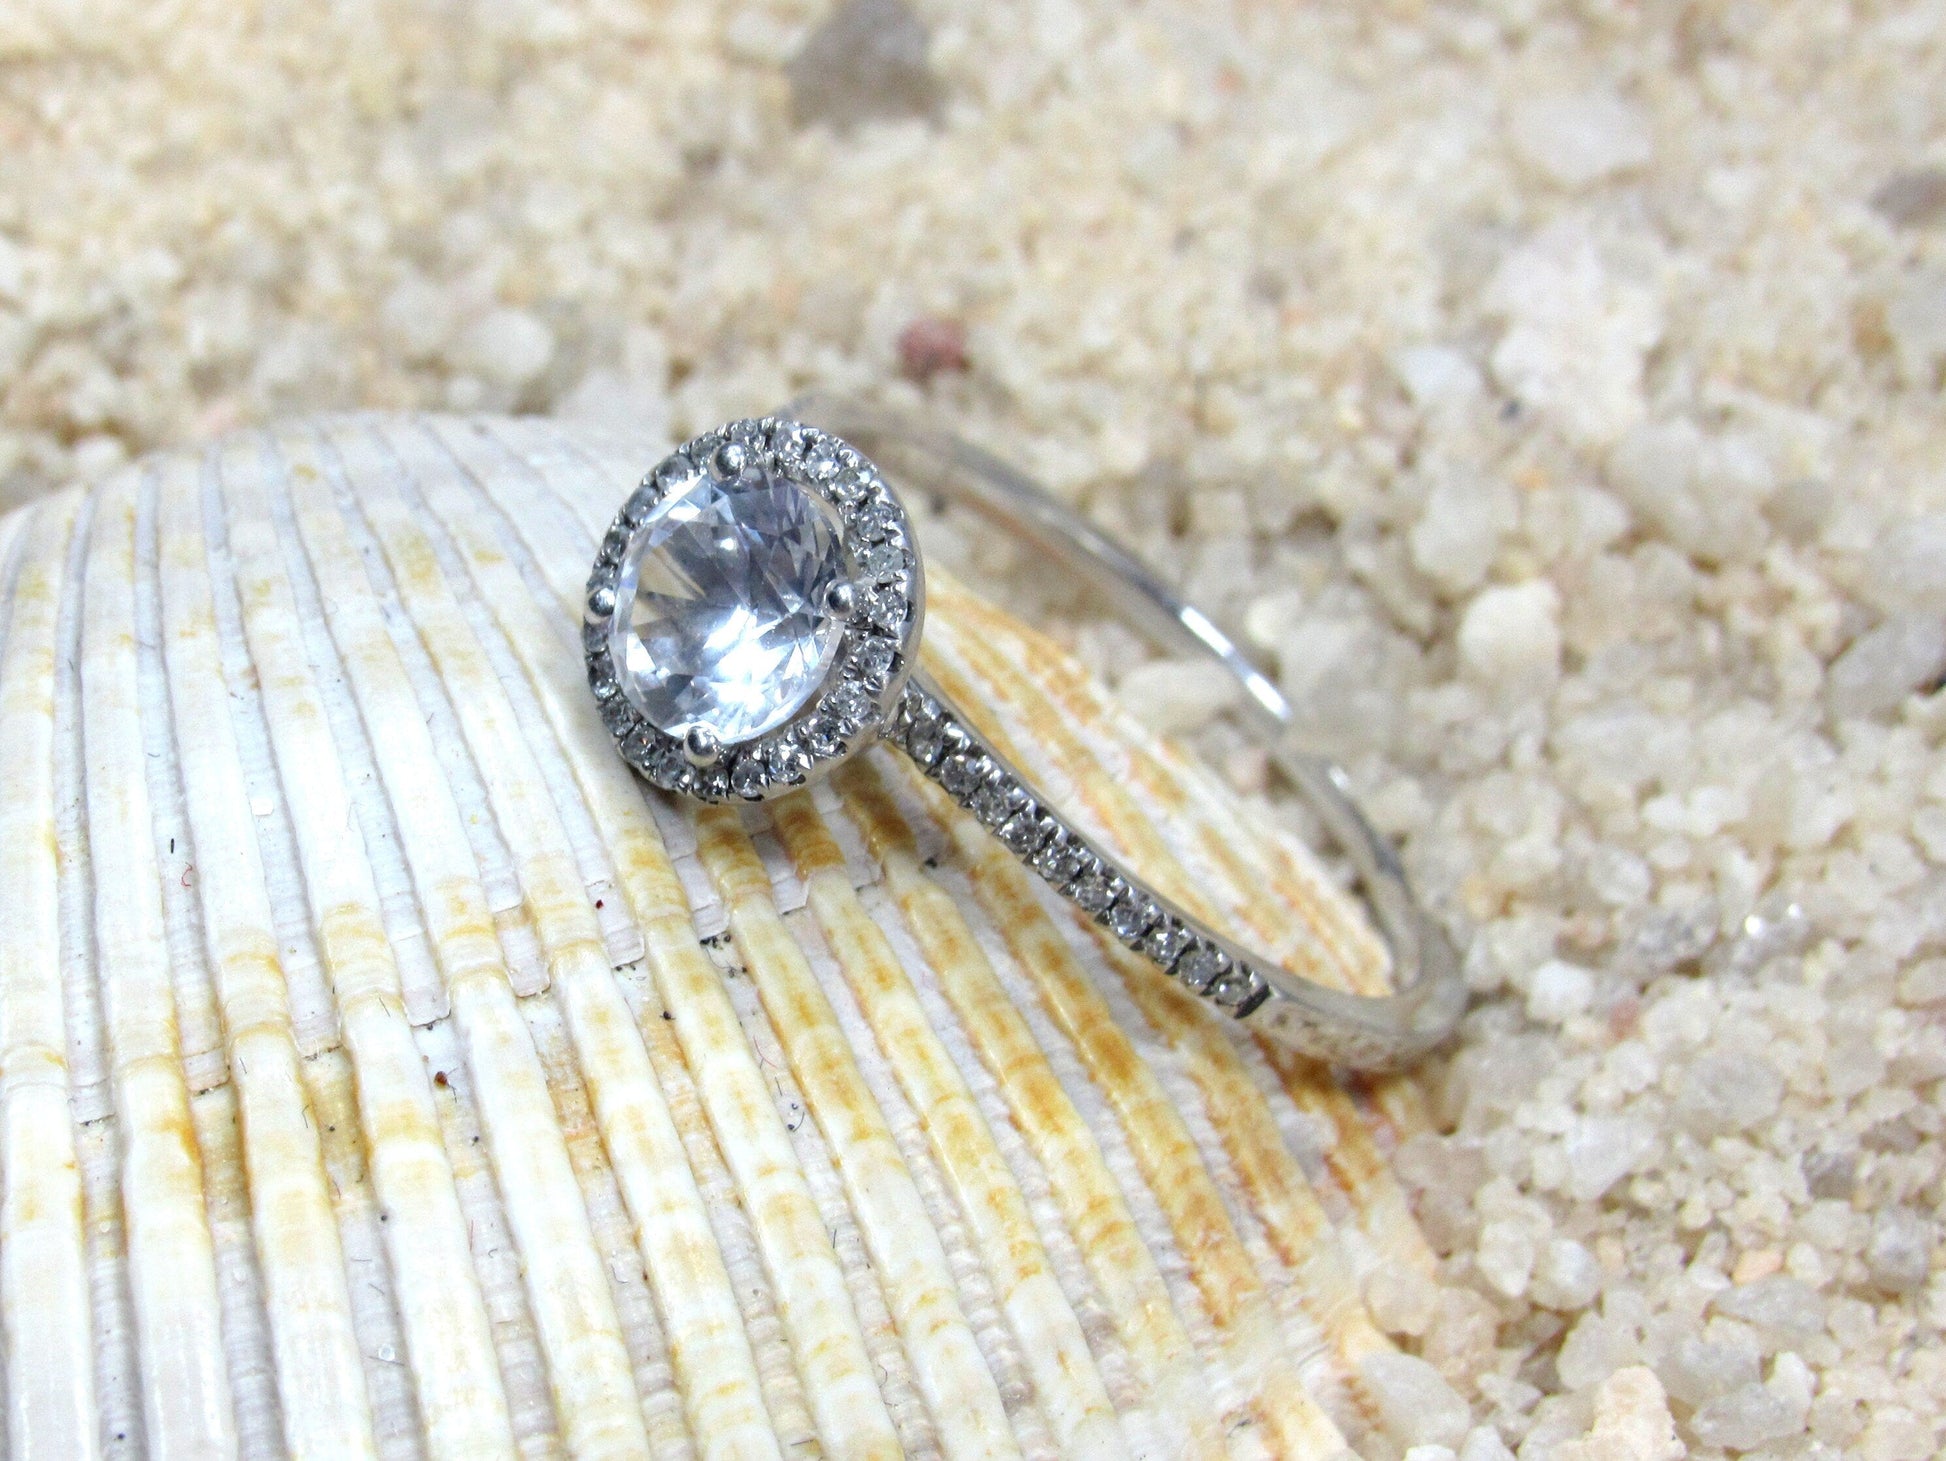 Alexandrite Sapphire Purple Engagement Ring, Round Diamonds Halo Ring, Pricus, 1ct Ring,White Gold-Yellow Gold-Rose Gold Ring, 6mm BellaMoreDesign.com